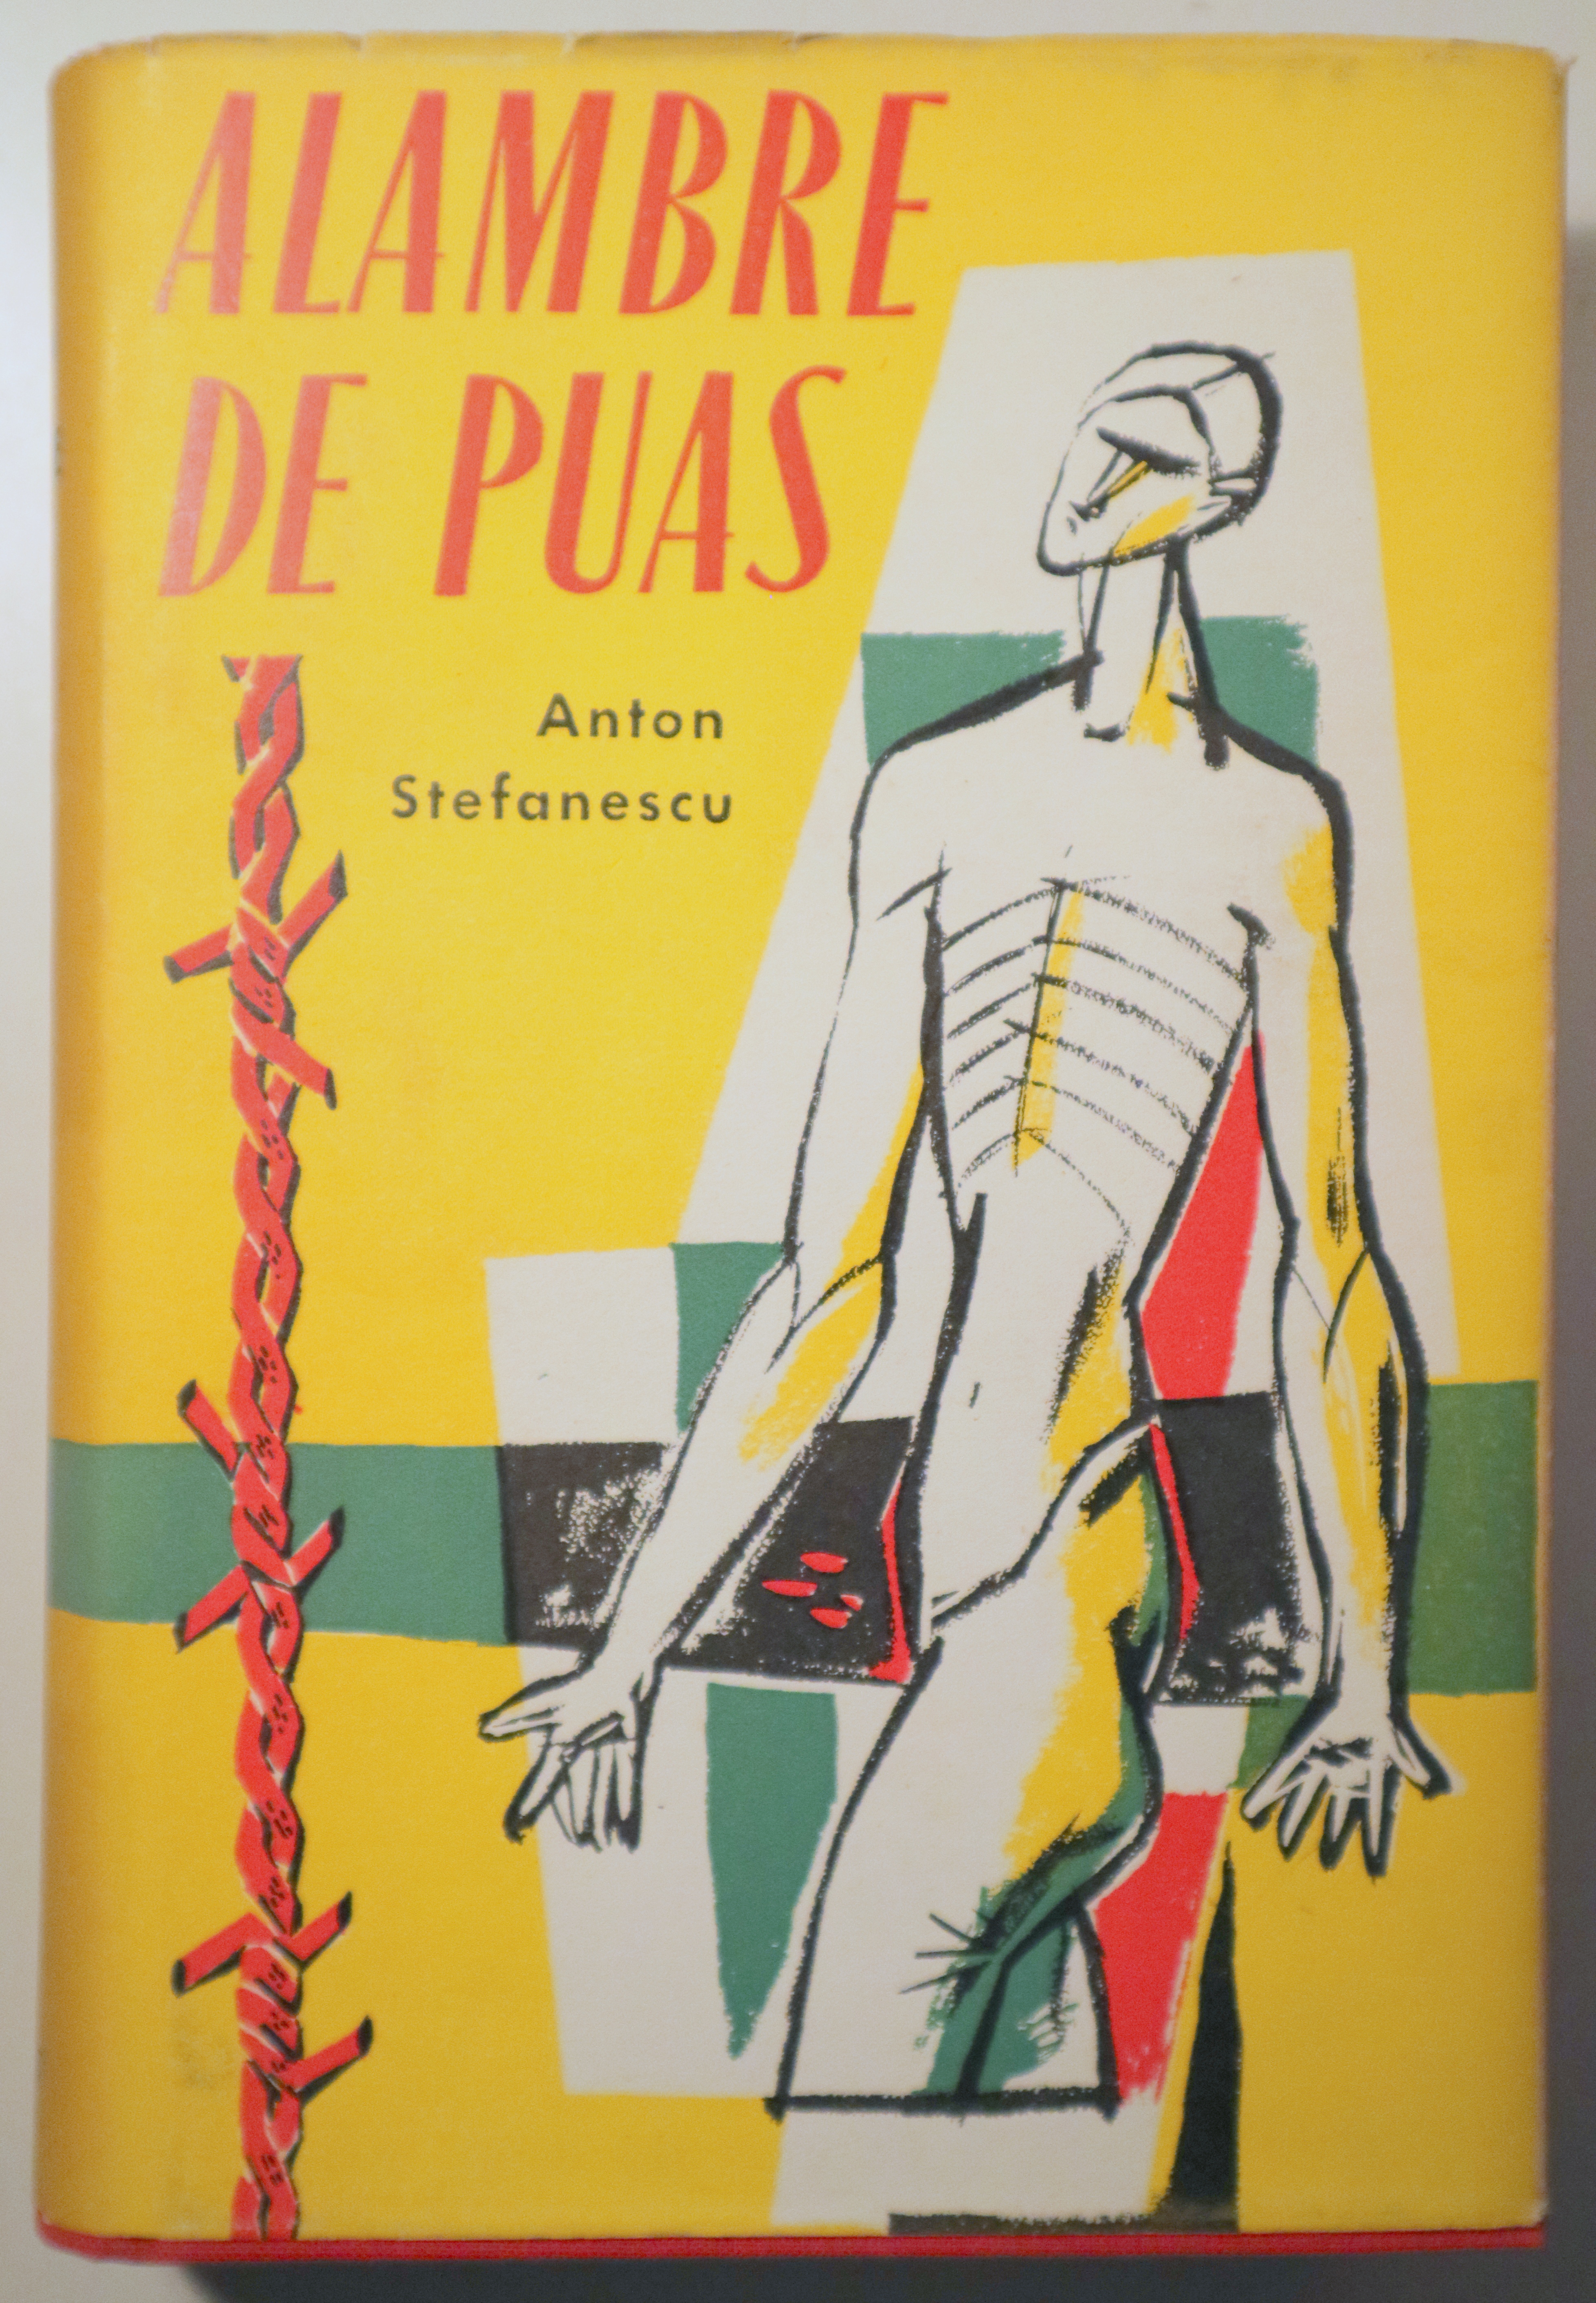 ALAMBRE DE PUAS - Barcelona 1956 - 1ª edición en español